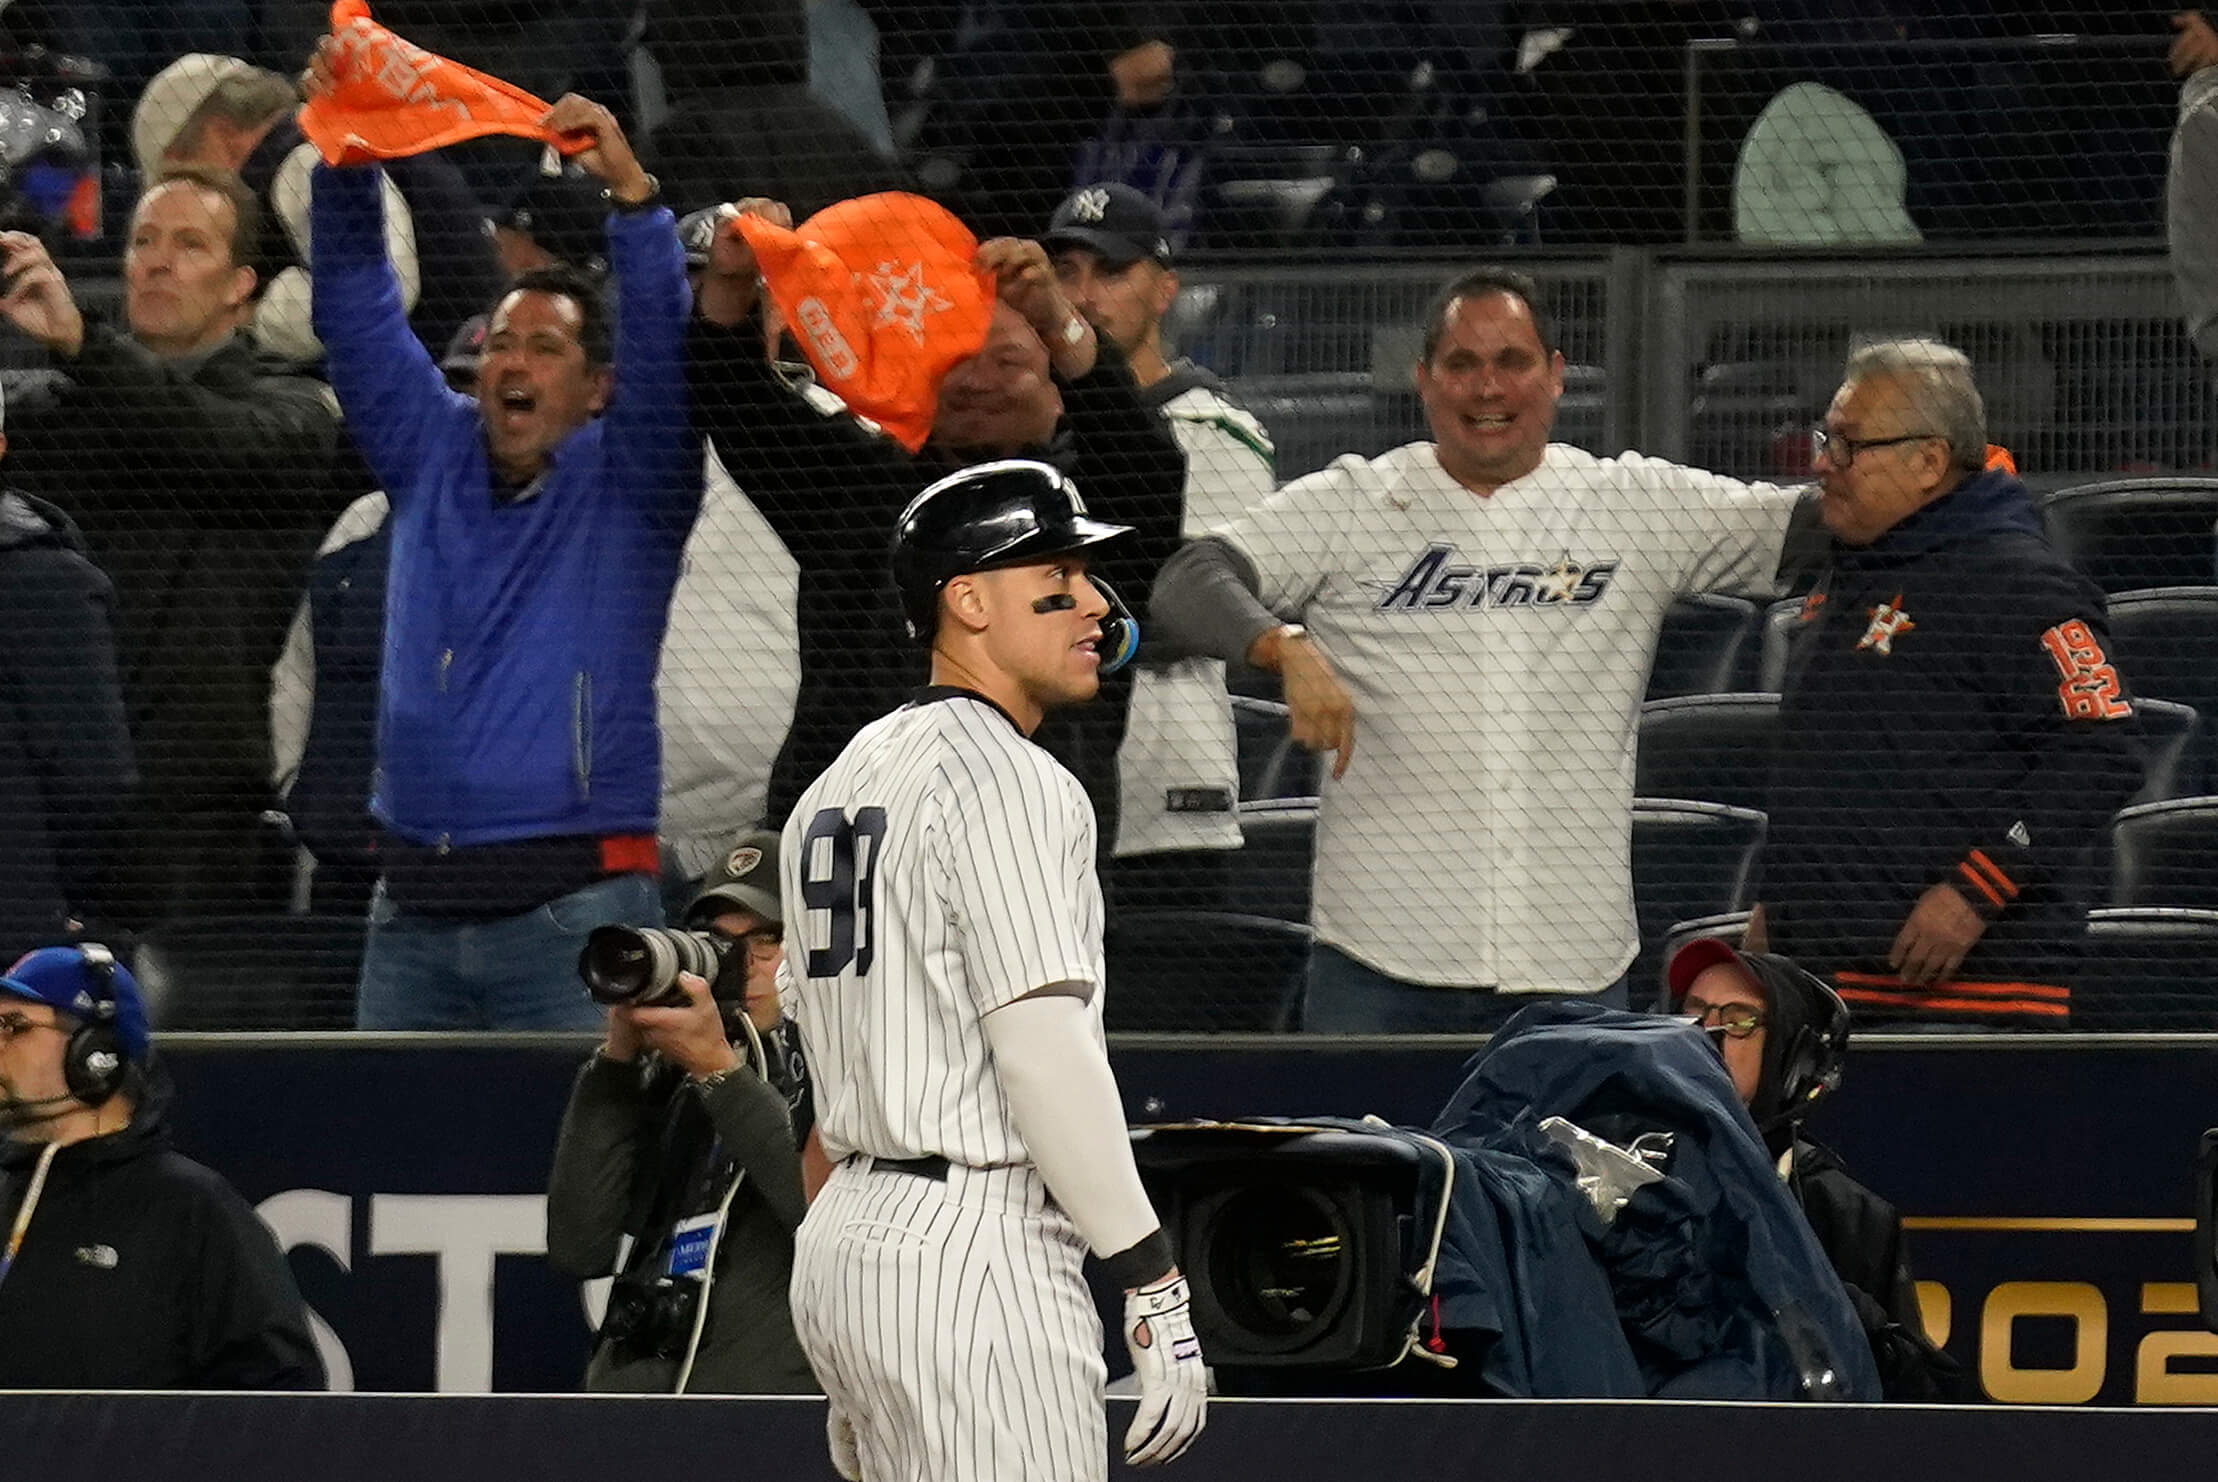 New York Yankees fans ecstatic as Aaron Judge takes BP in Colorado